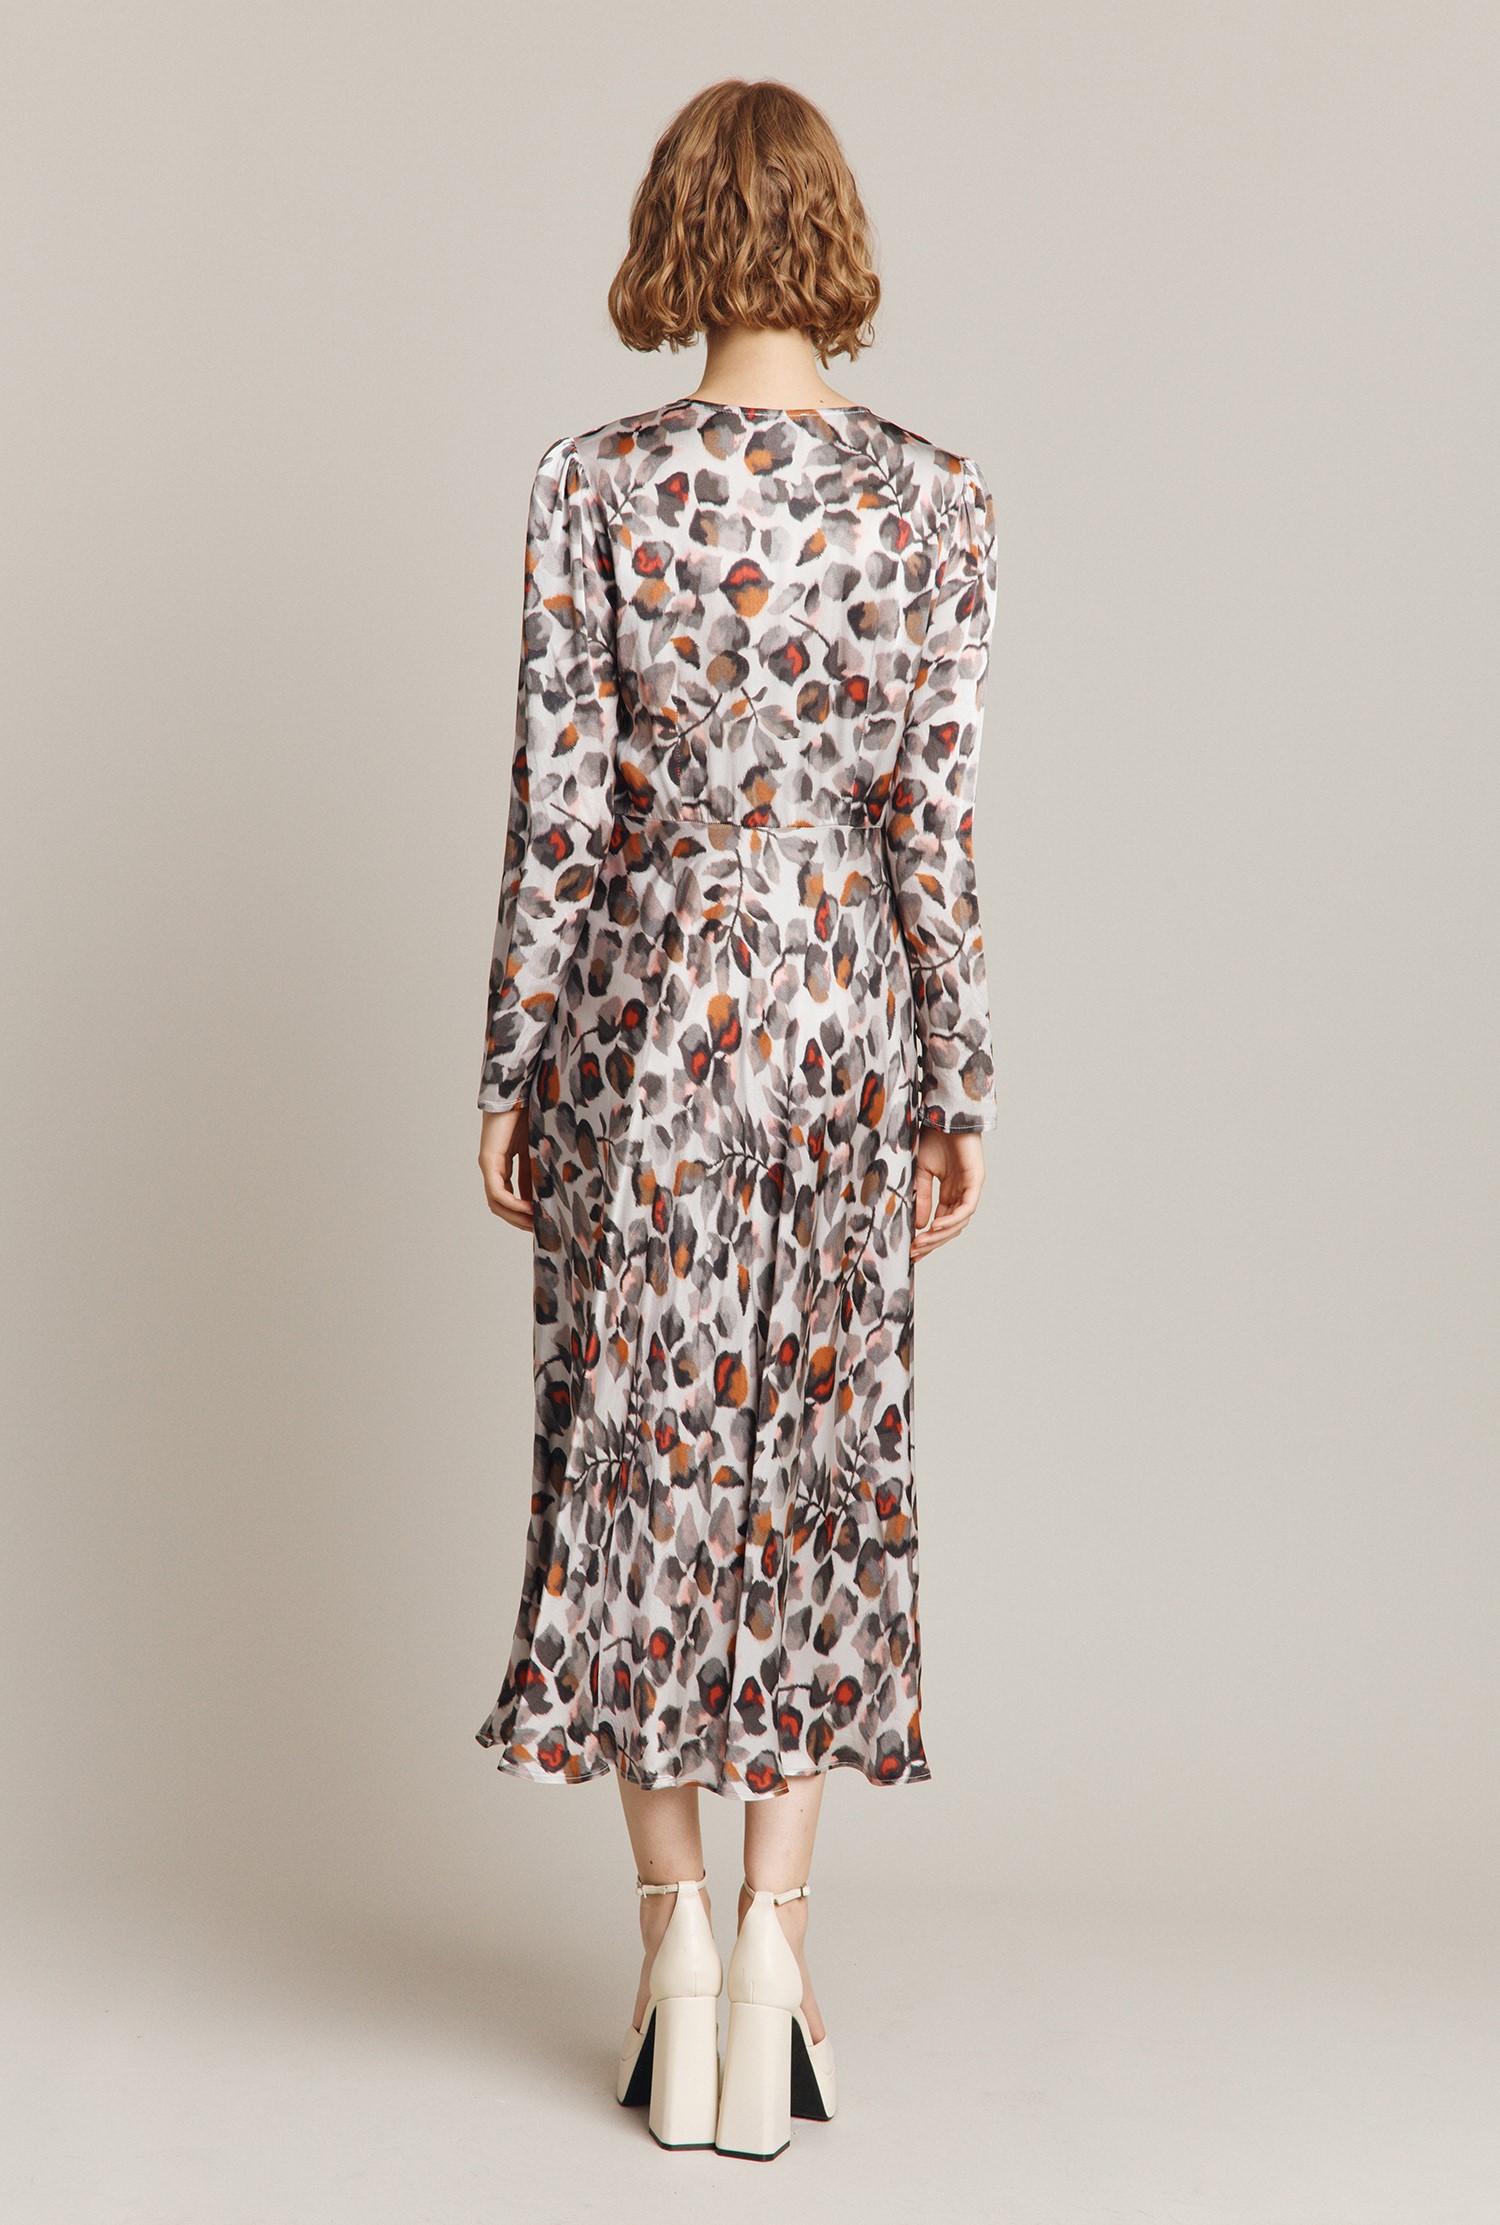 Verity Grey Leaf Print Satin Midi Dress | Ghost London